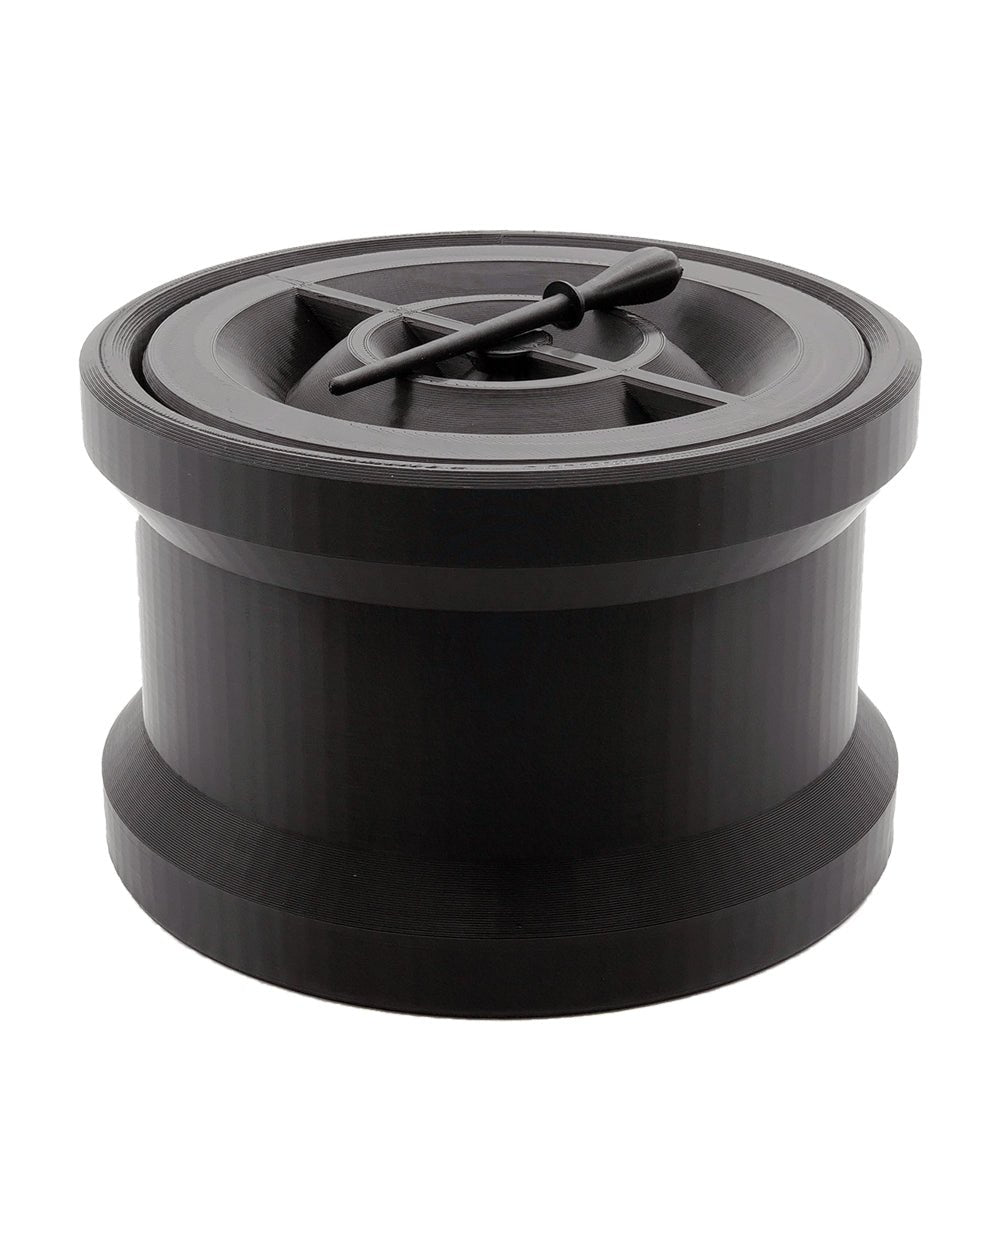 HUMBOLDT | Black Pre-Rolled Cones Filling Machine Cartridge 98mm | Fill 121 Cones Per Run - 2